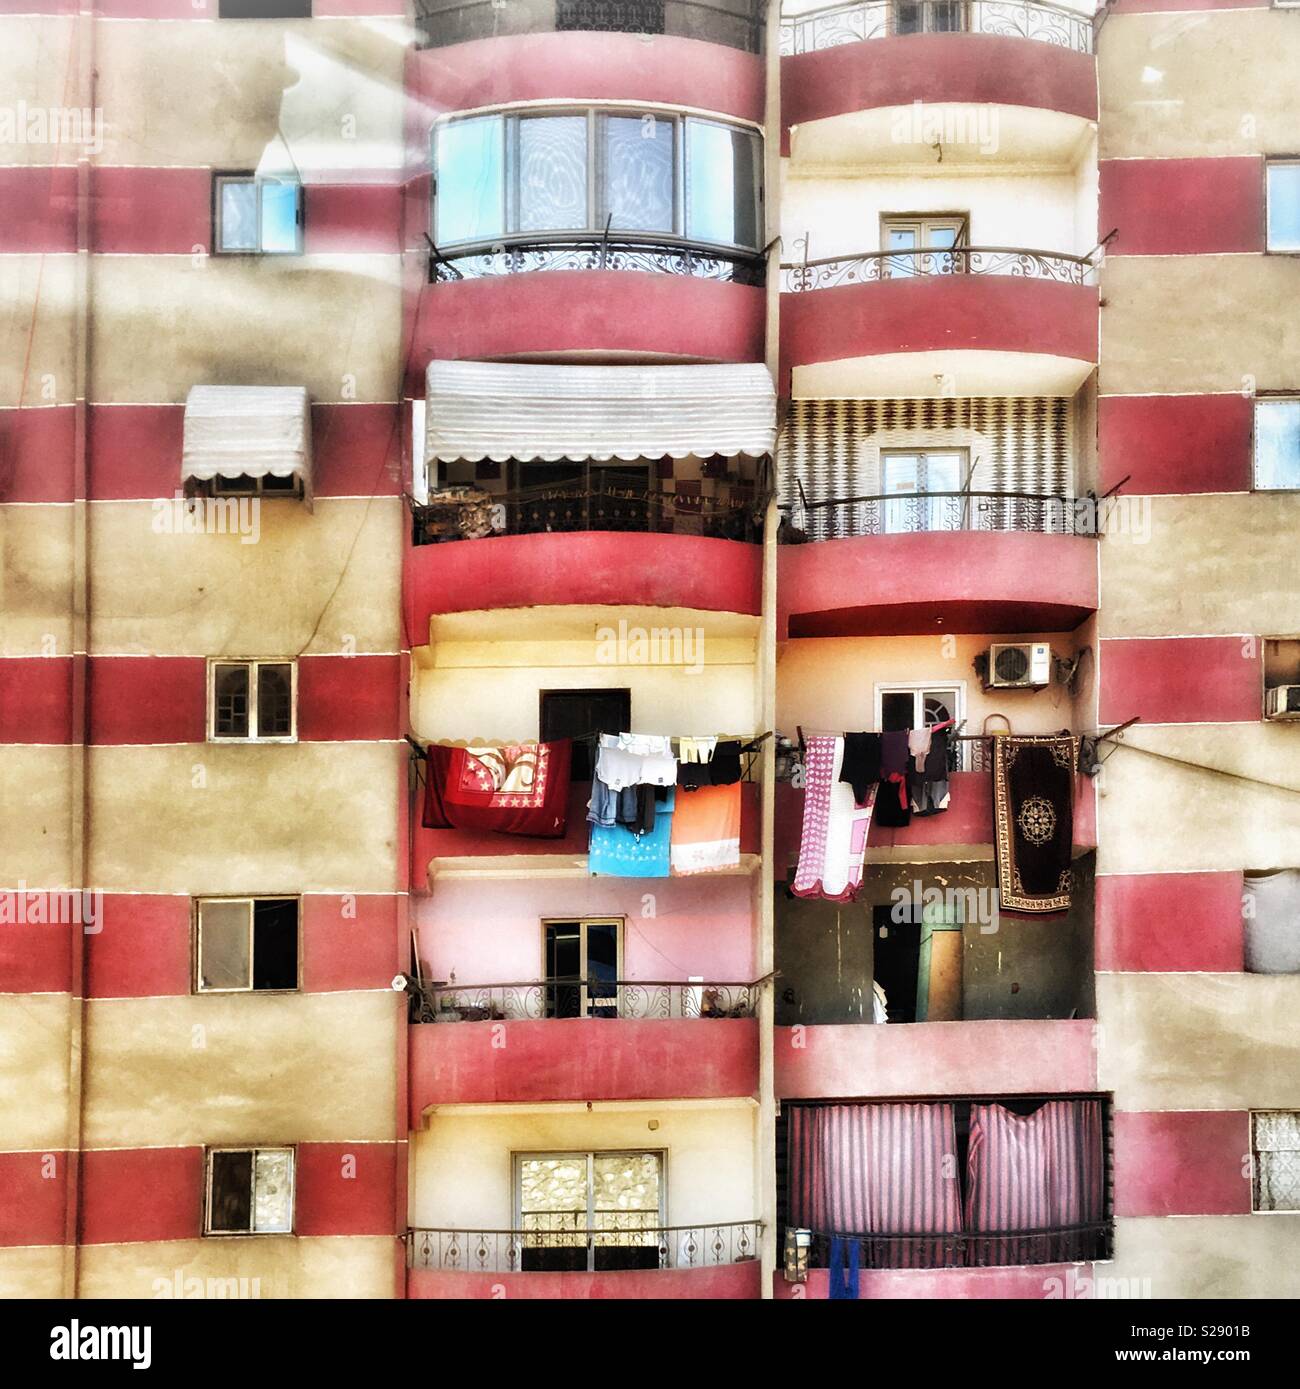 Cairo flats abstract Stock Photo